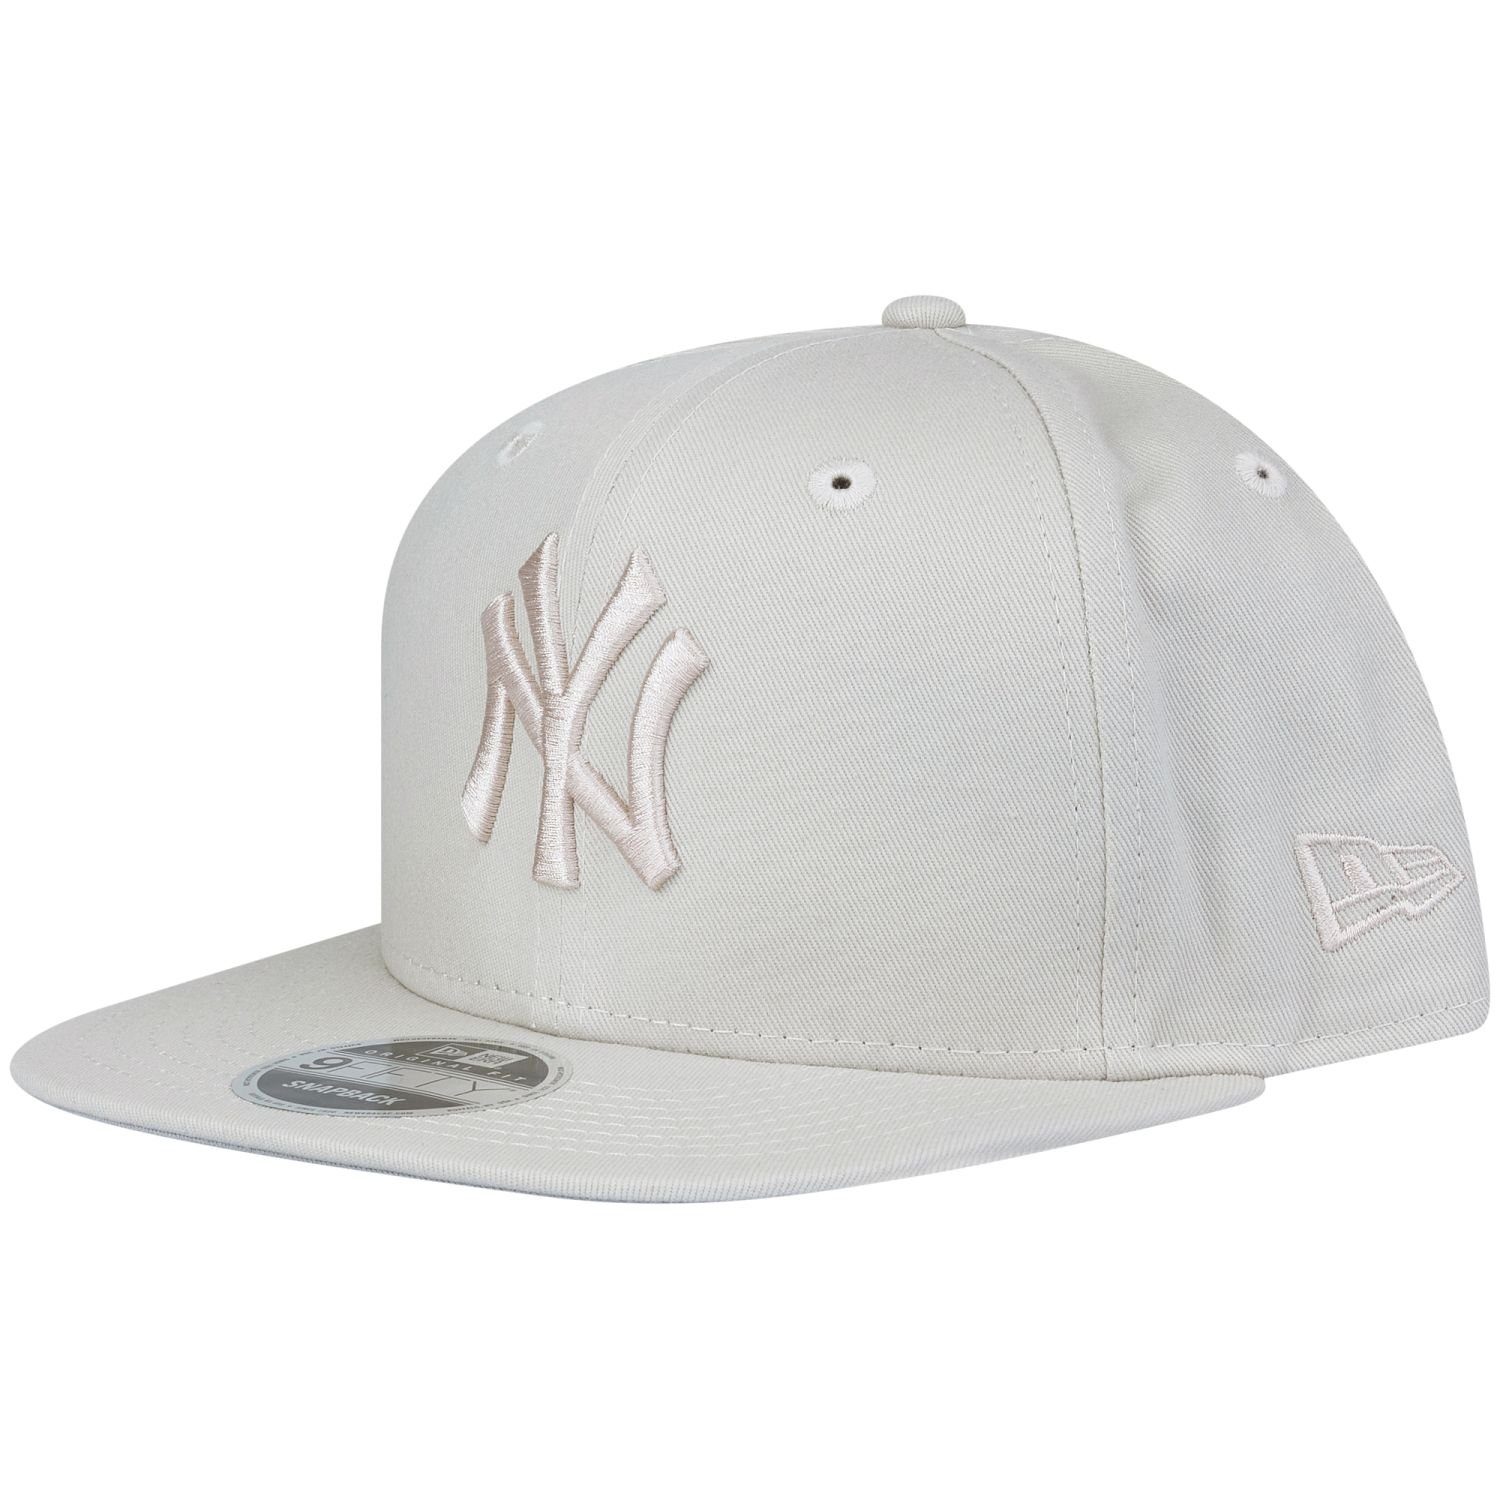 New Era Snapback Cap 9Fifty Original New York Yankees | Snapback Caps